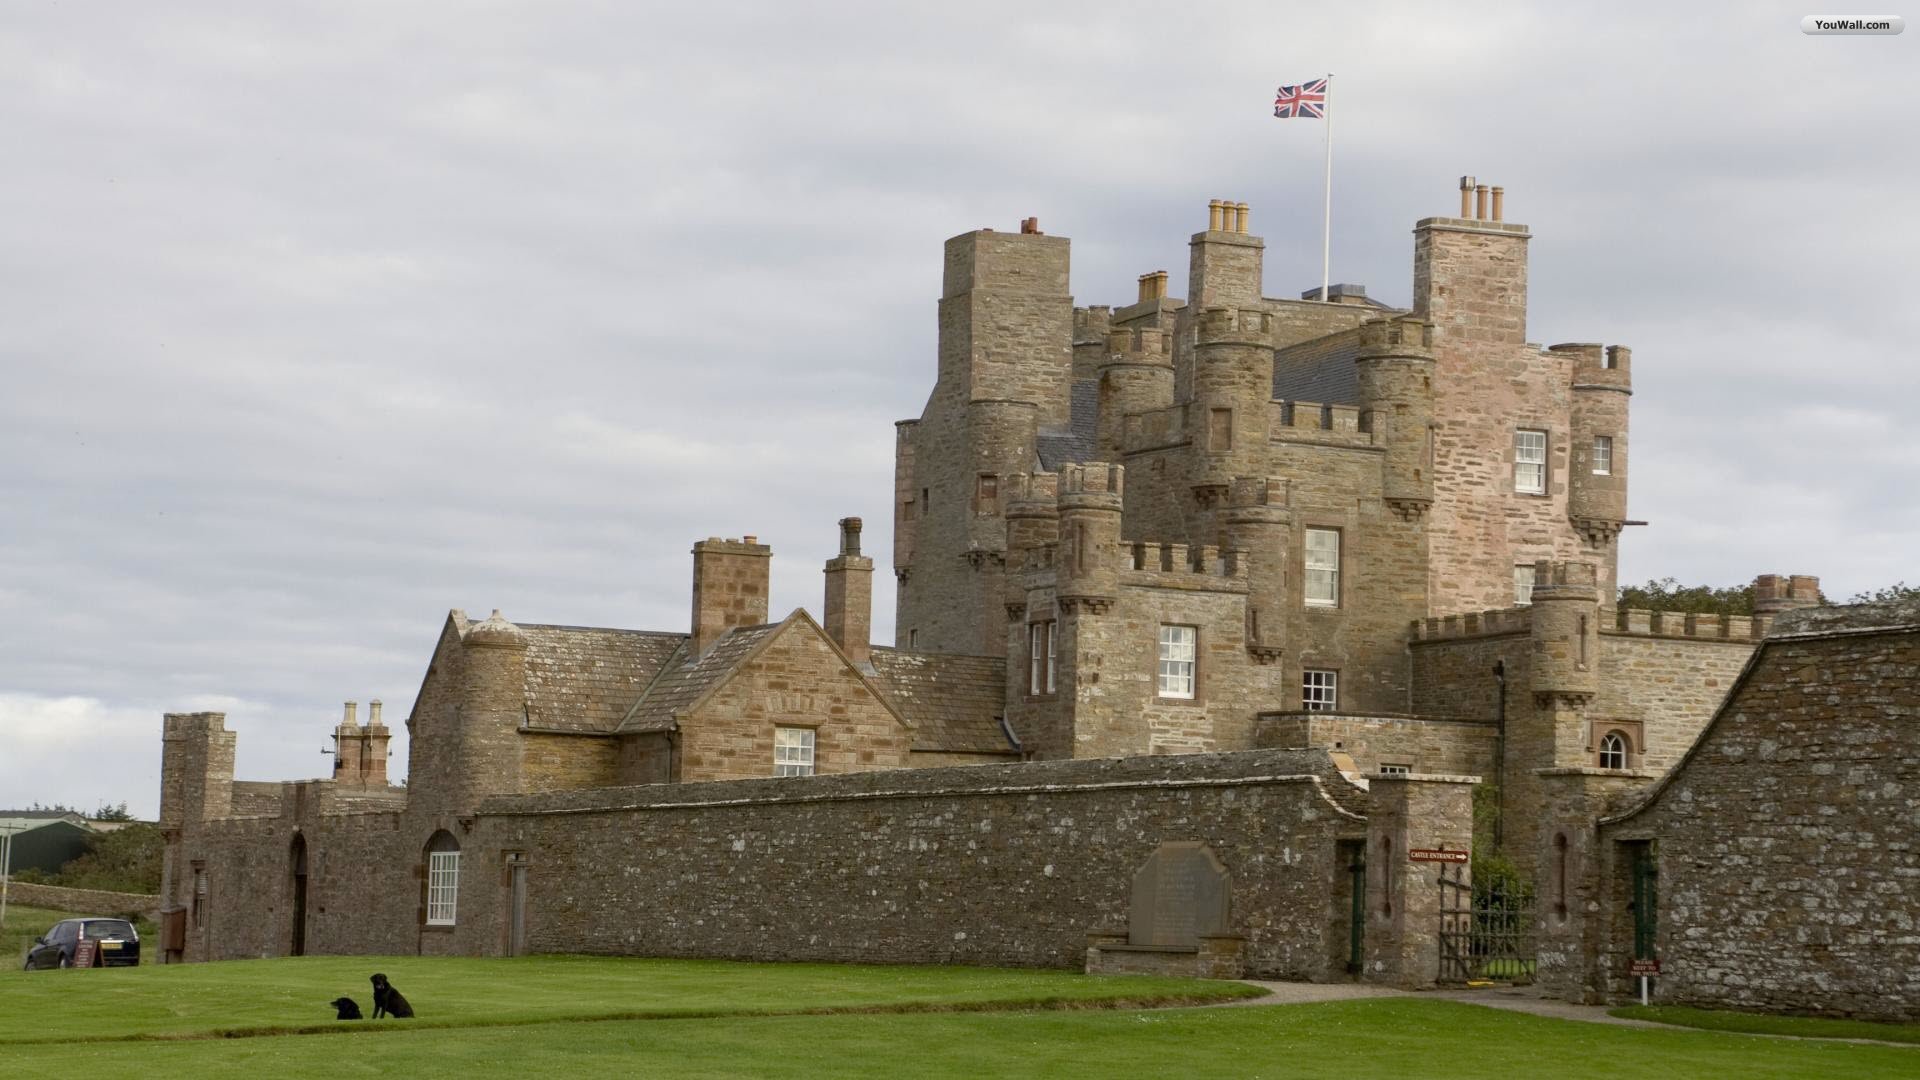 YouWall   Castle of Mey   Scotland Wallpaper   wallpaperwallpapers